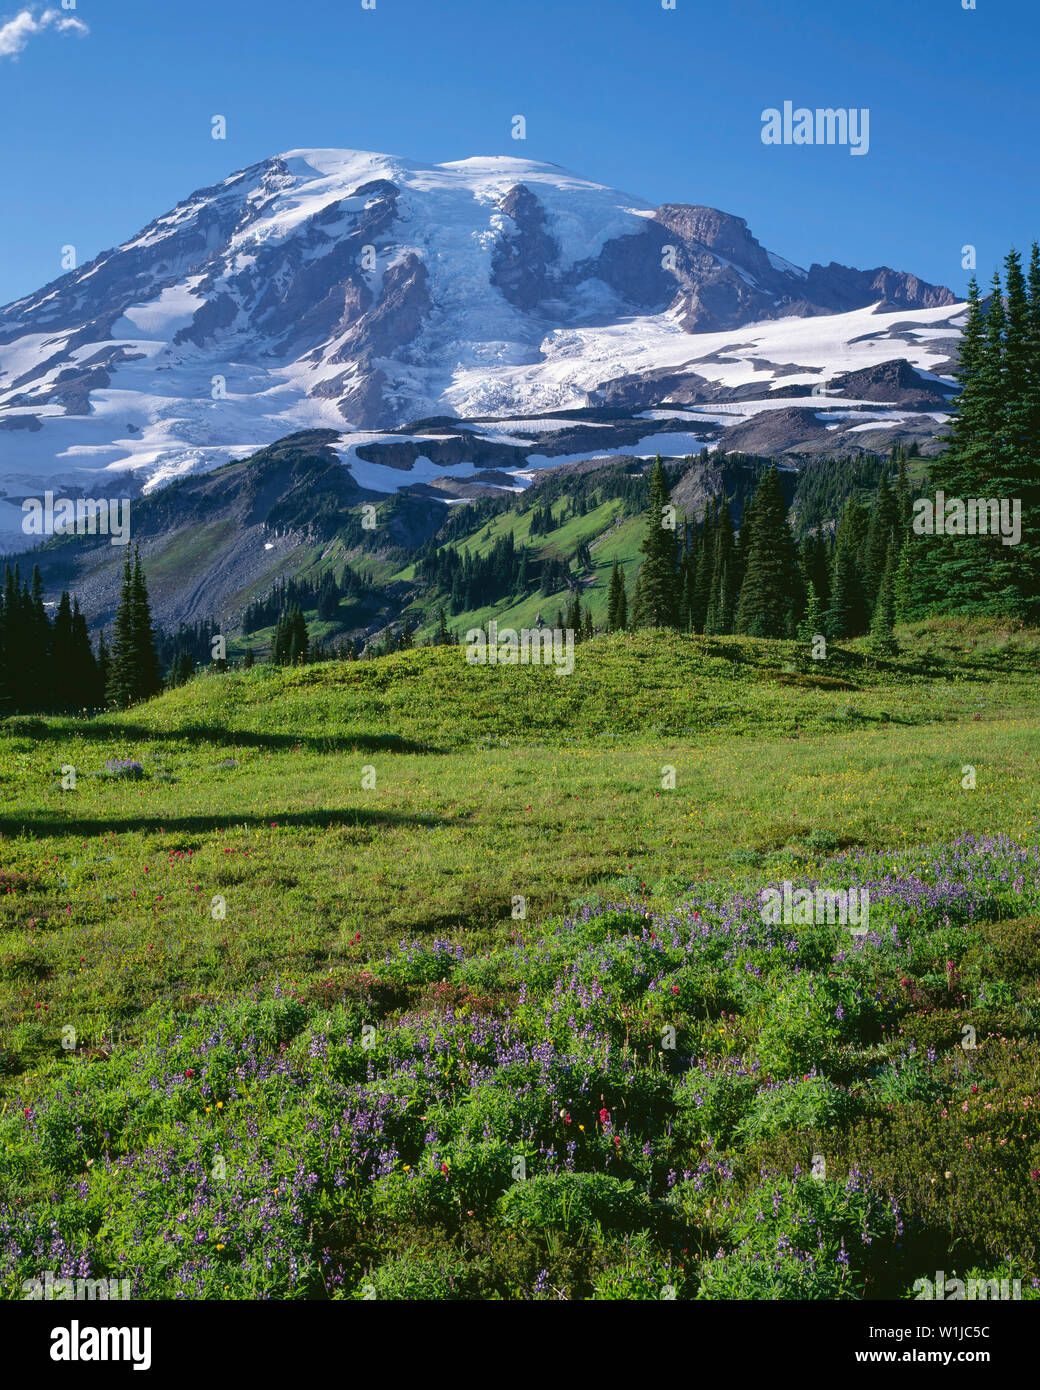 USA, Washington, Mt. Rainier National Park, Wildflowers in bloom on Mazama ridge and heavily glaciated south side of Mt. Rainier. Stock Photo